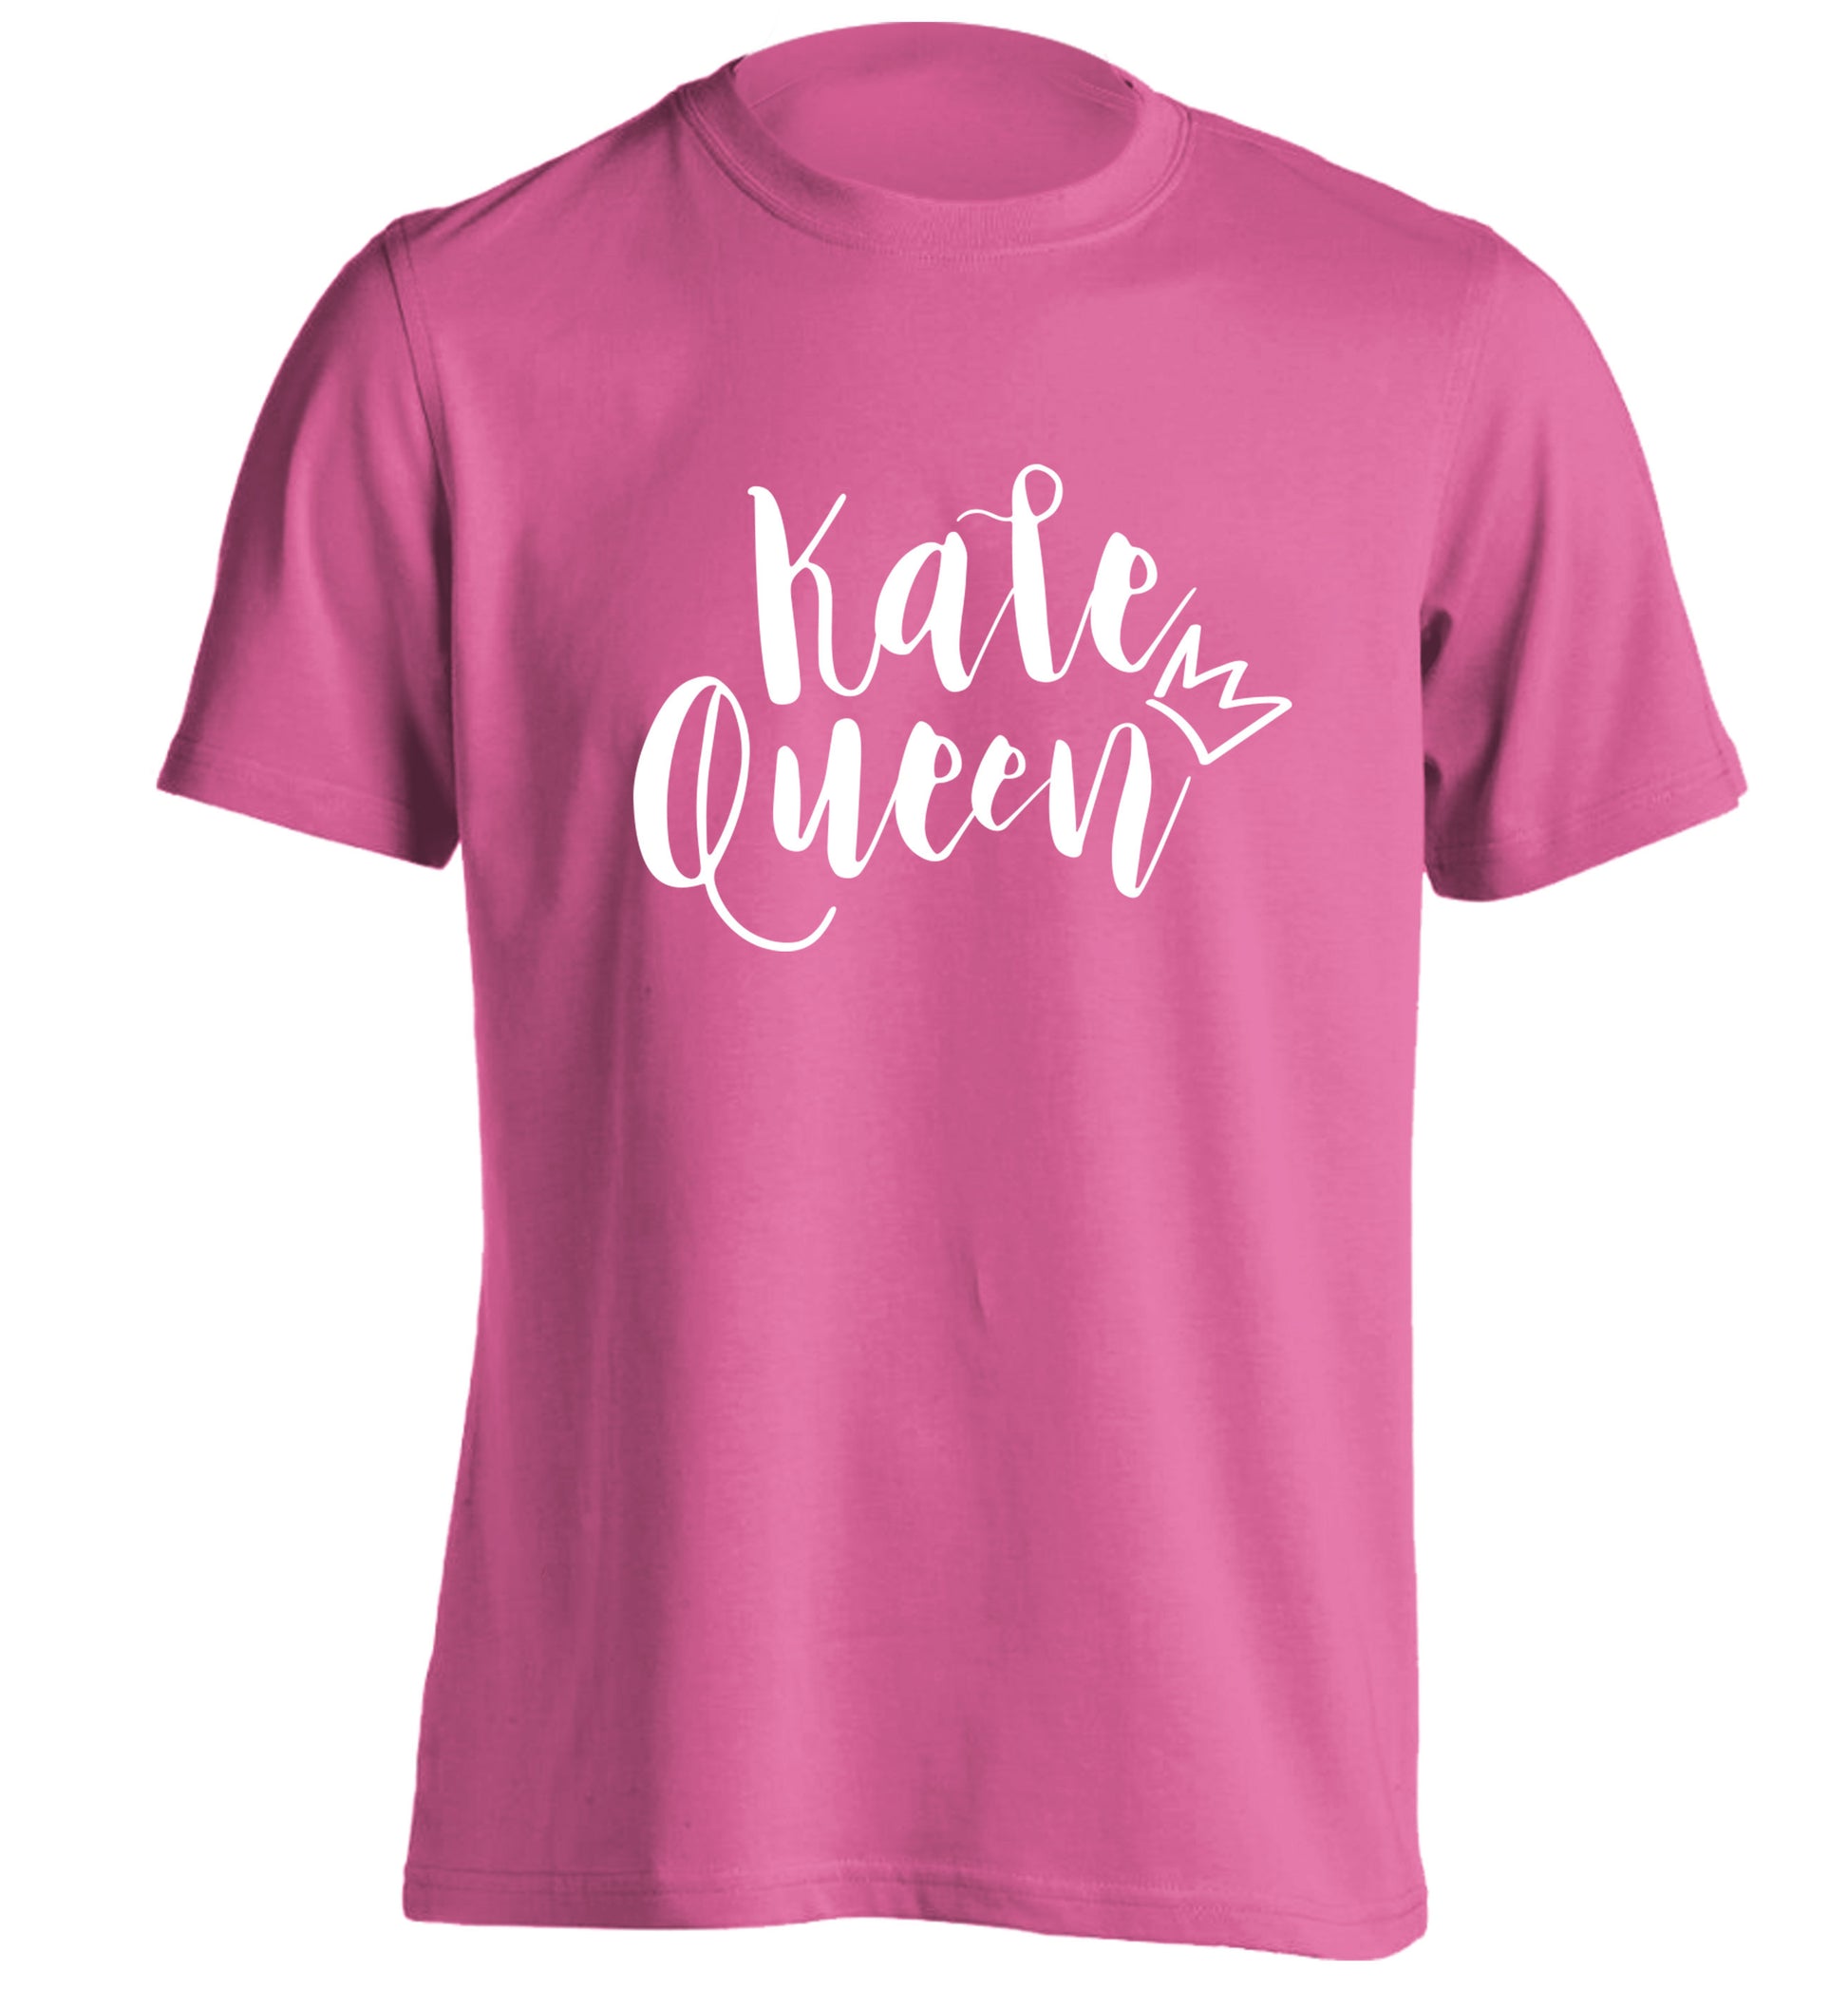 Kale Queen adults unisex pink Tshirt 2XL